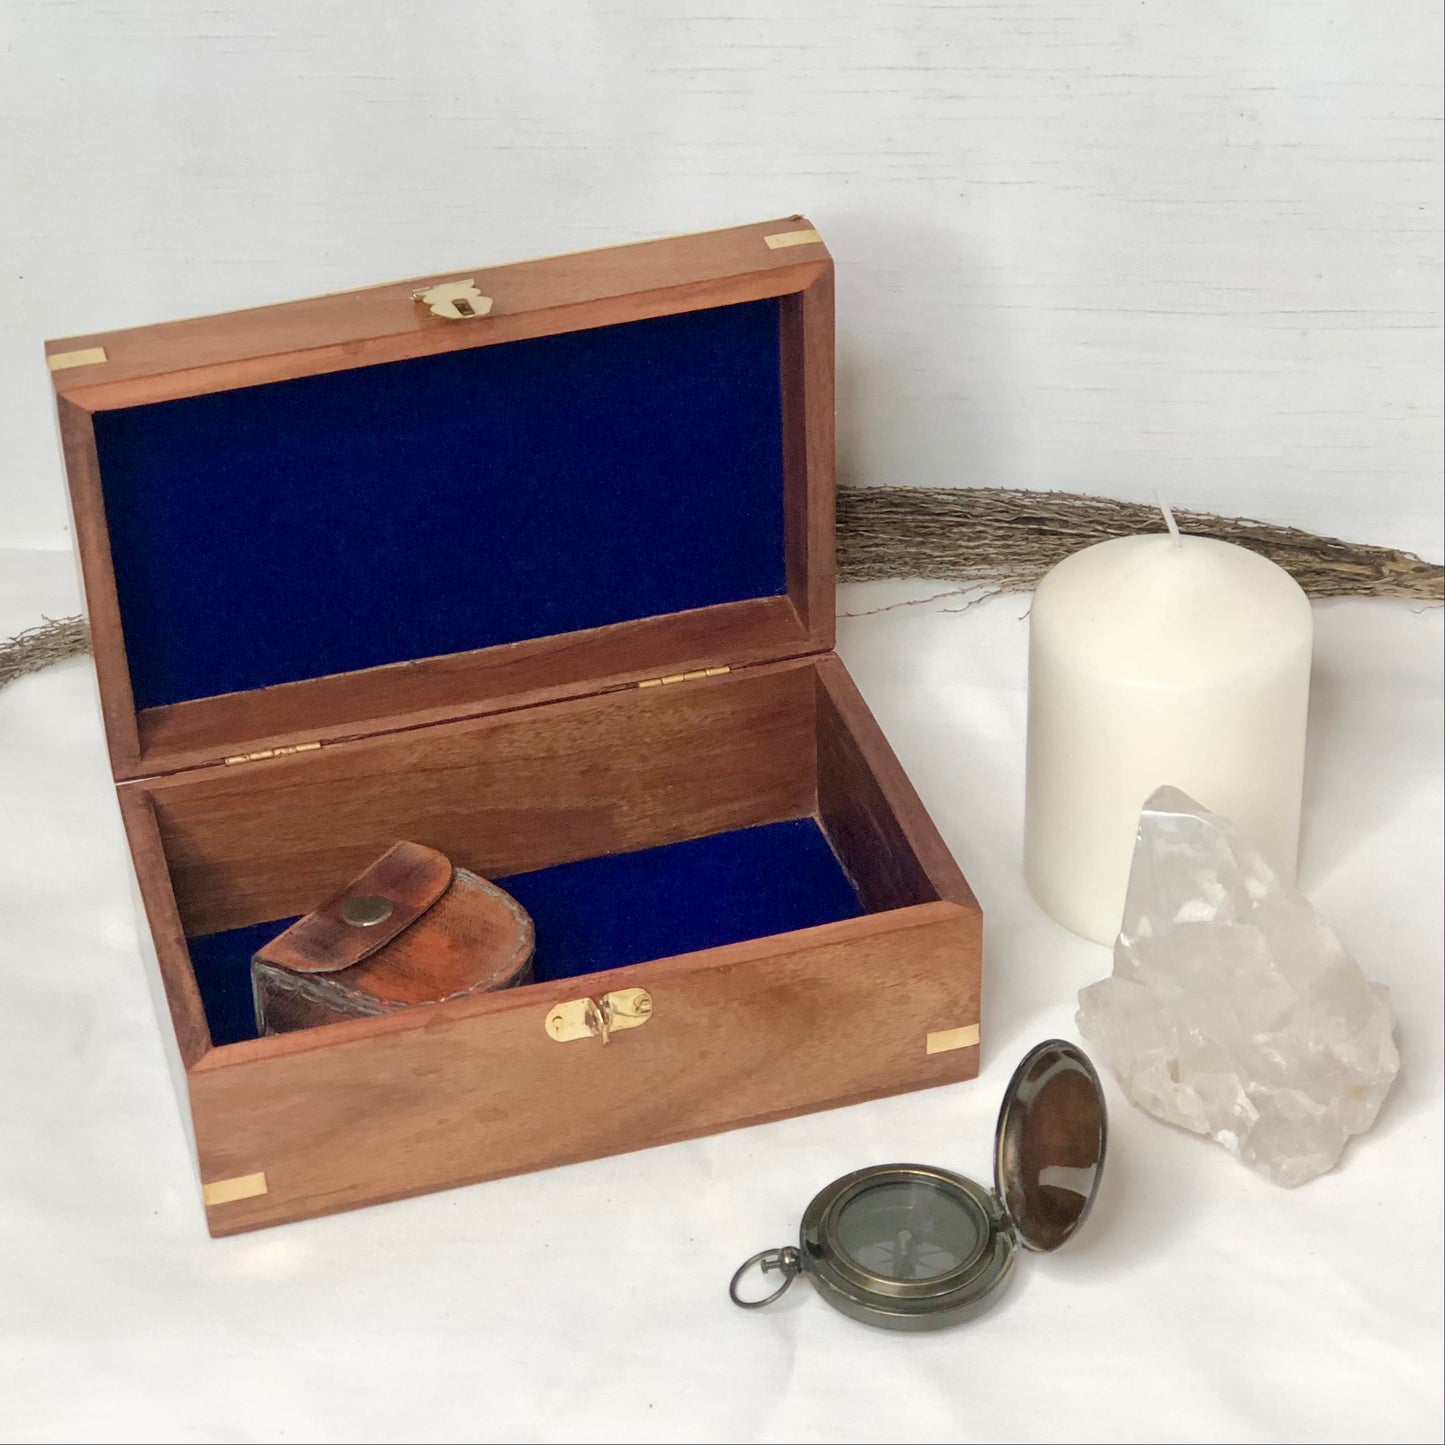 Hand crafted wood + brass treasure storage display box